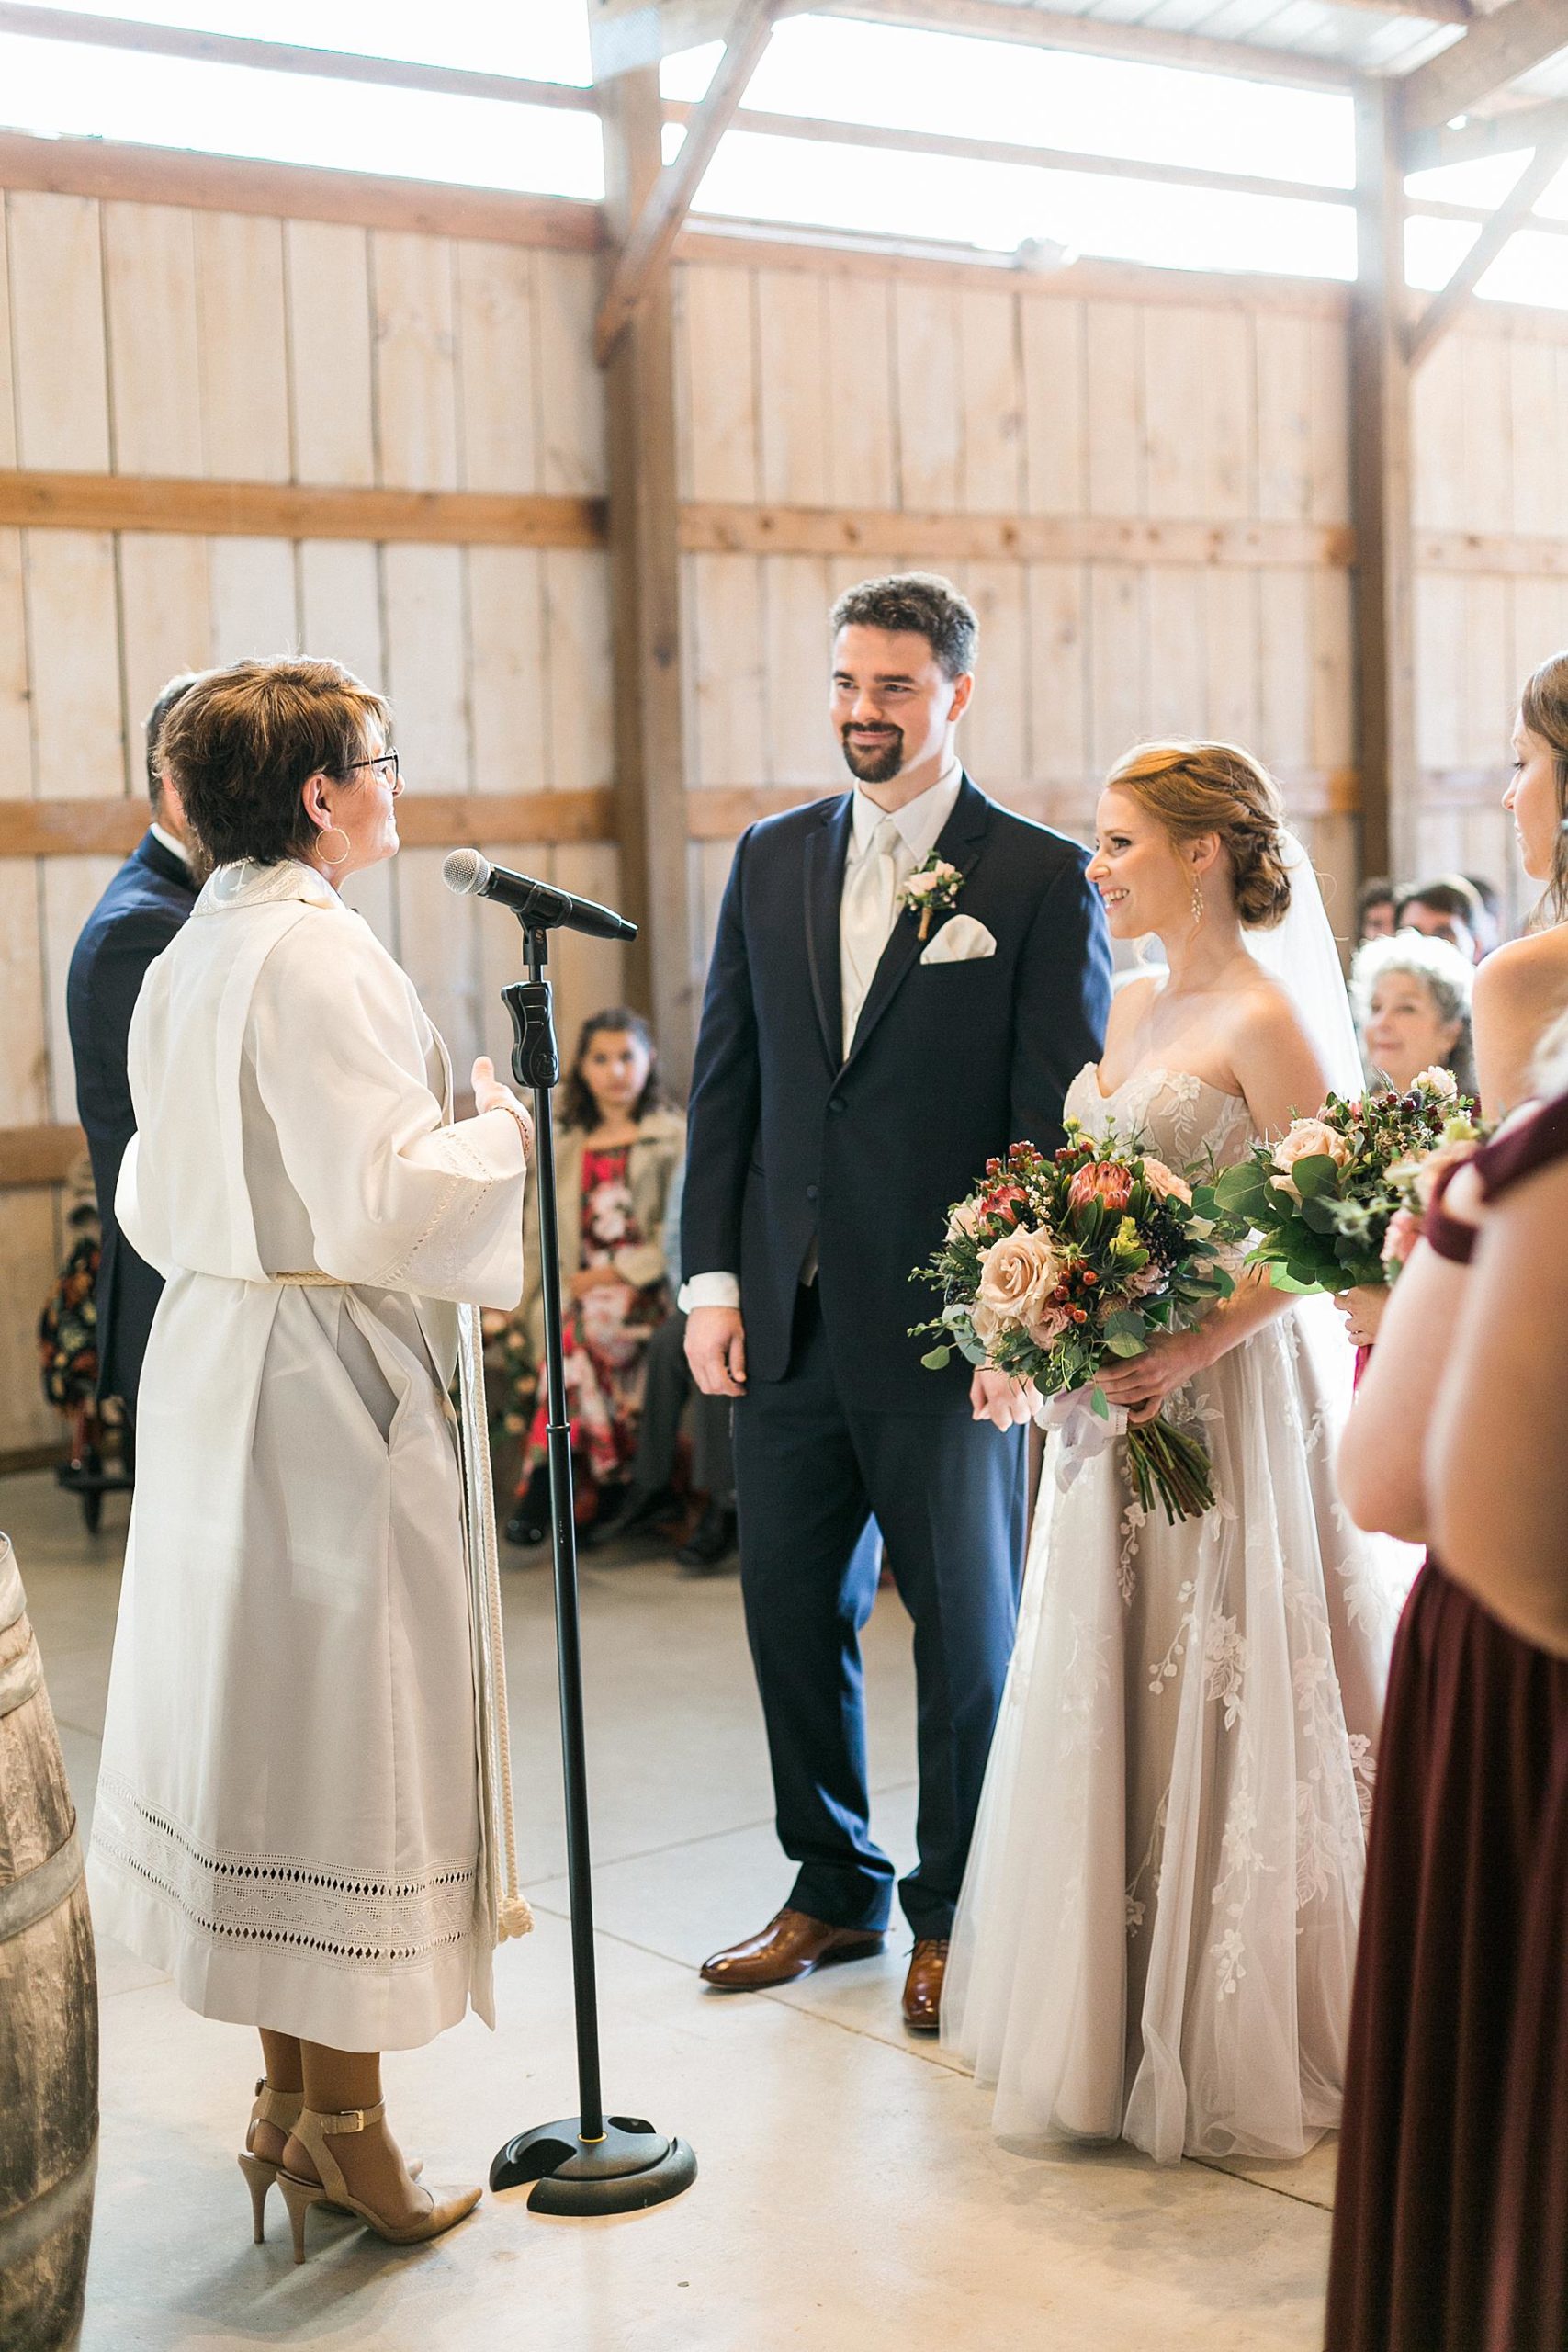 indoor barn wedding ceremony at lilac acres in milwaukee, wisconsin